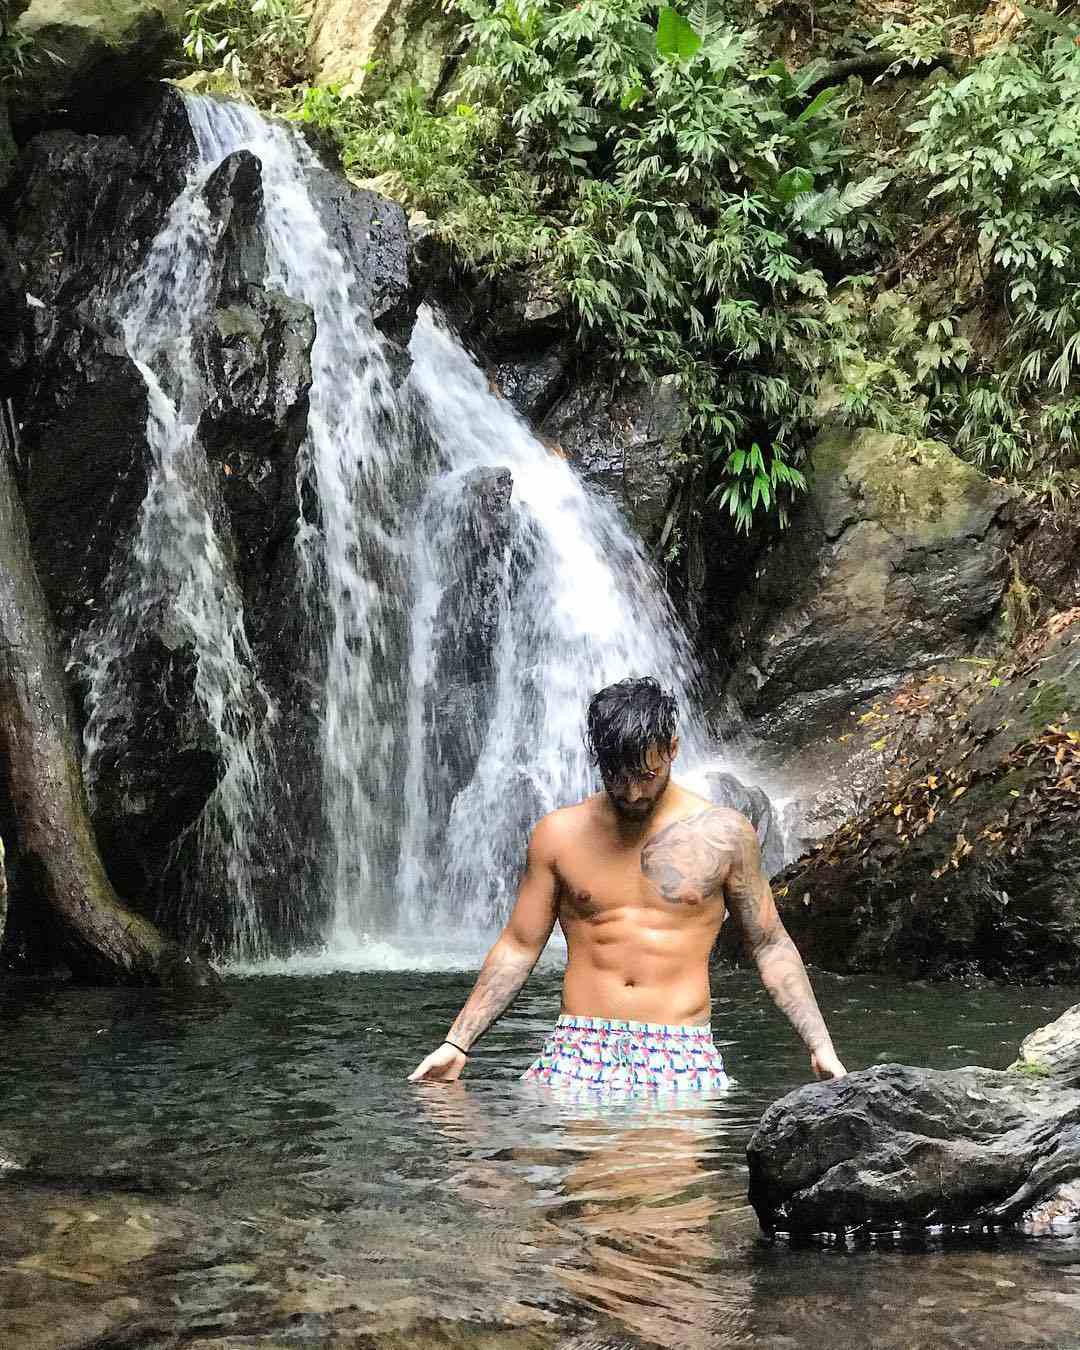 hot-summer-body-guy-waterfall-shirtless-hunk